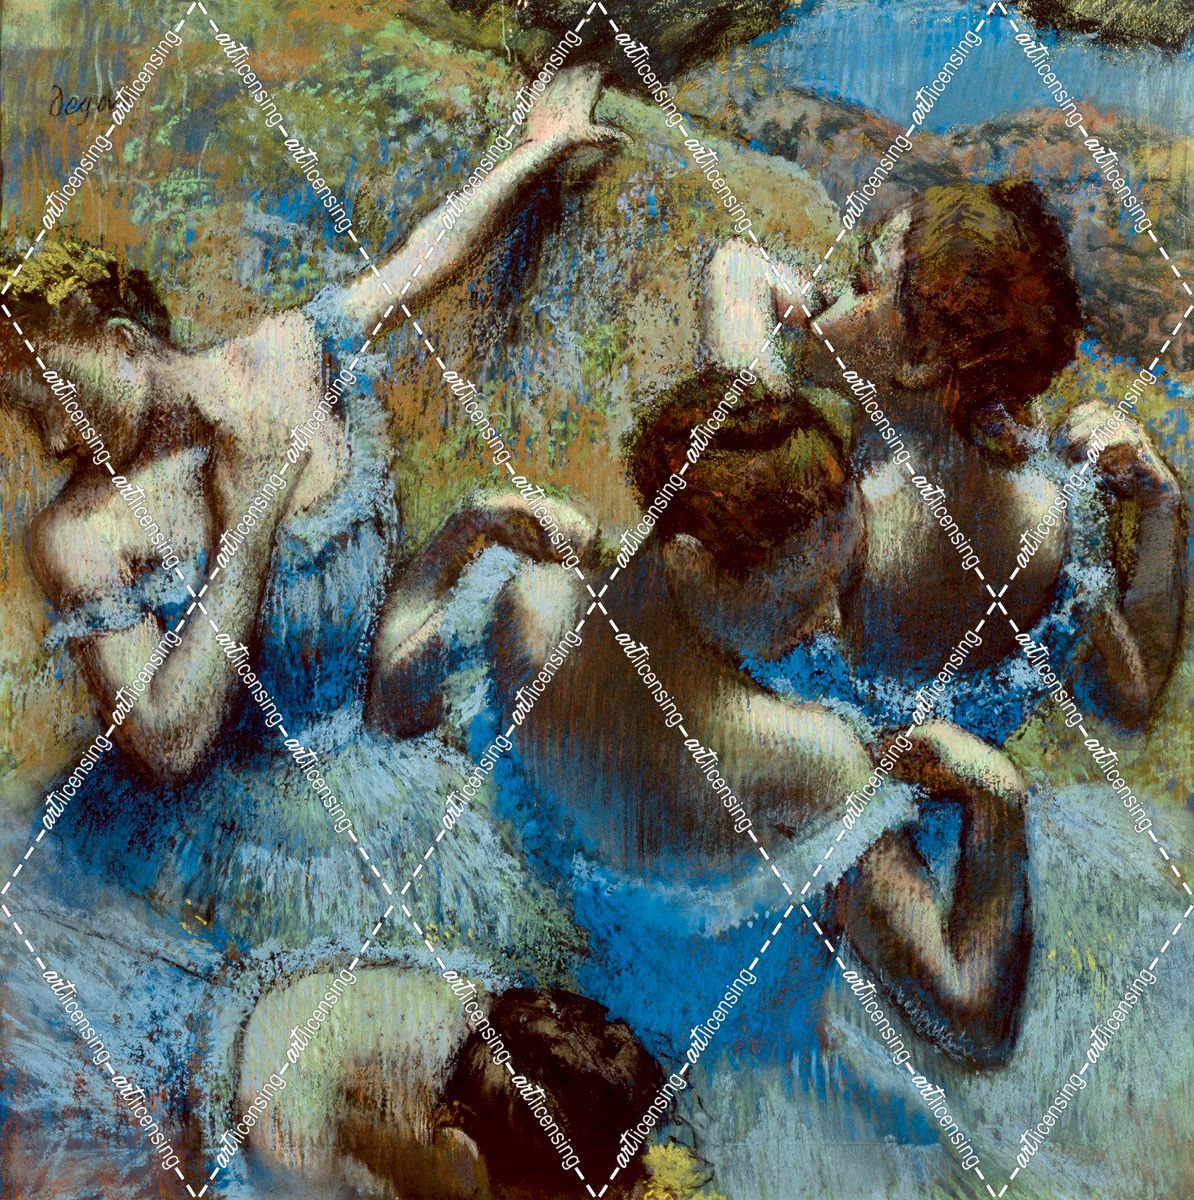 Degas-Dancers In Blue